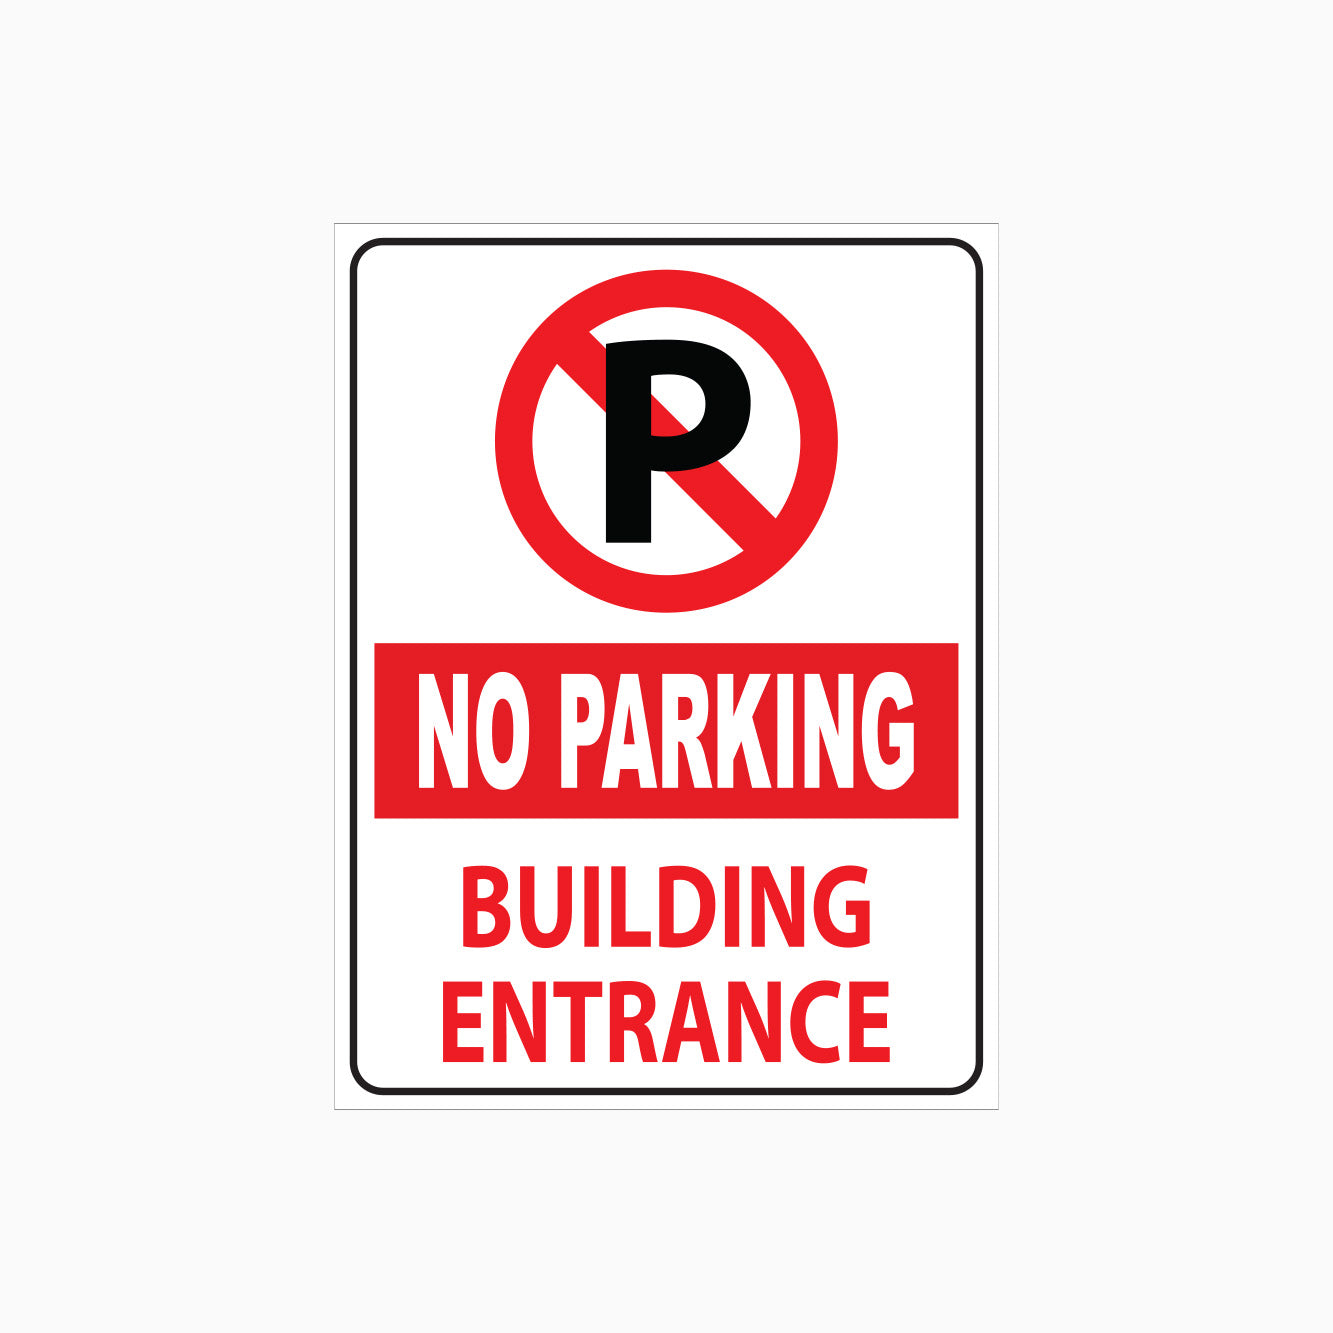 NO PARKING BUILDING ENTRANCE SIGN - Parking & No Parking Signs